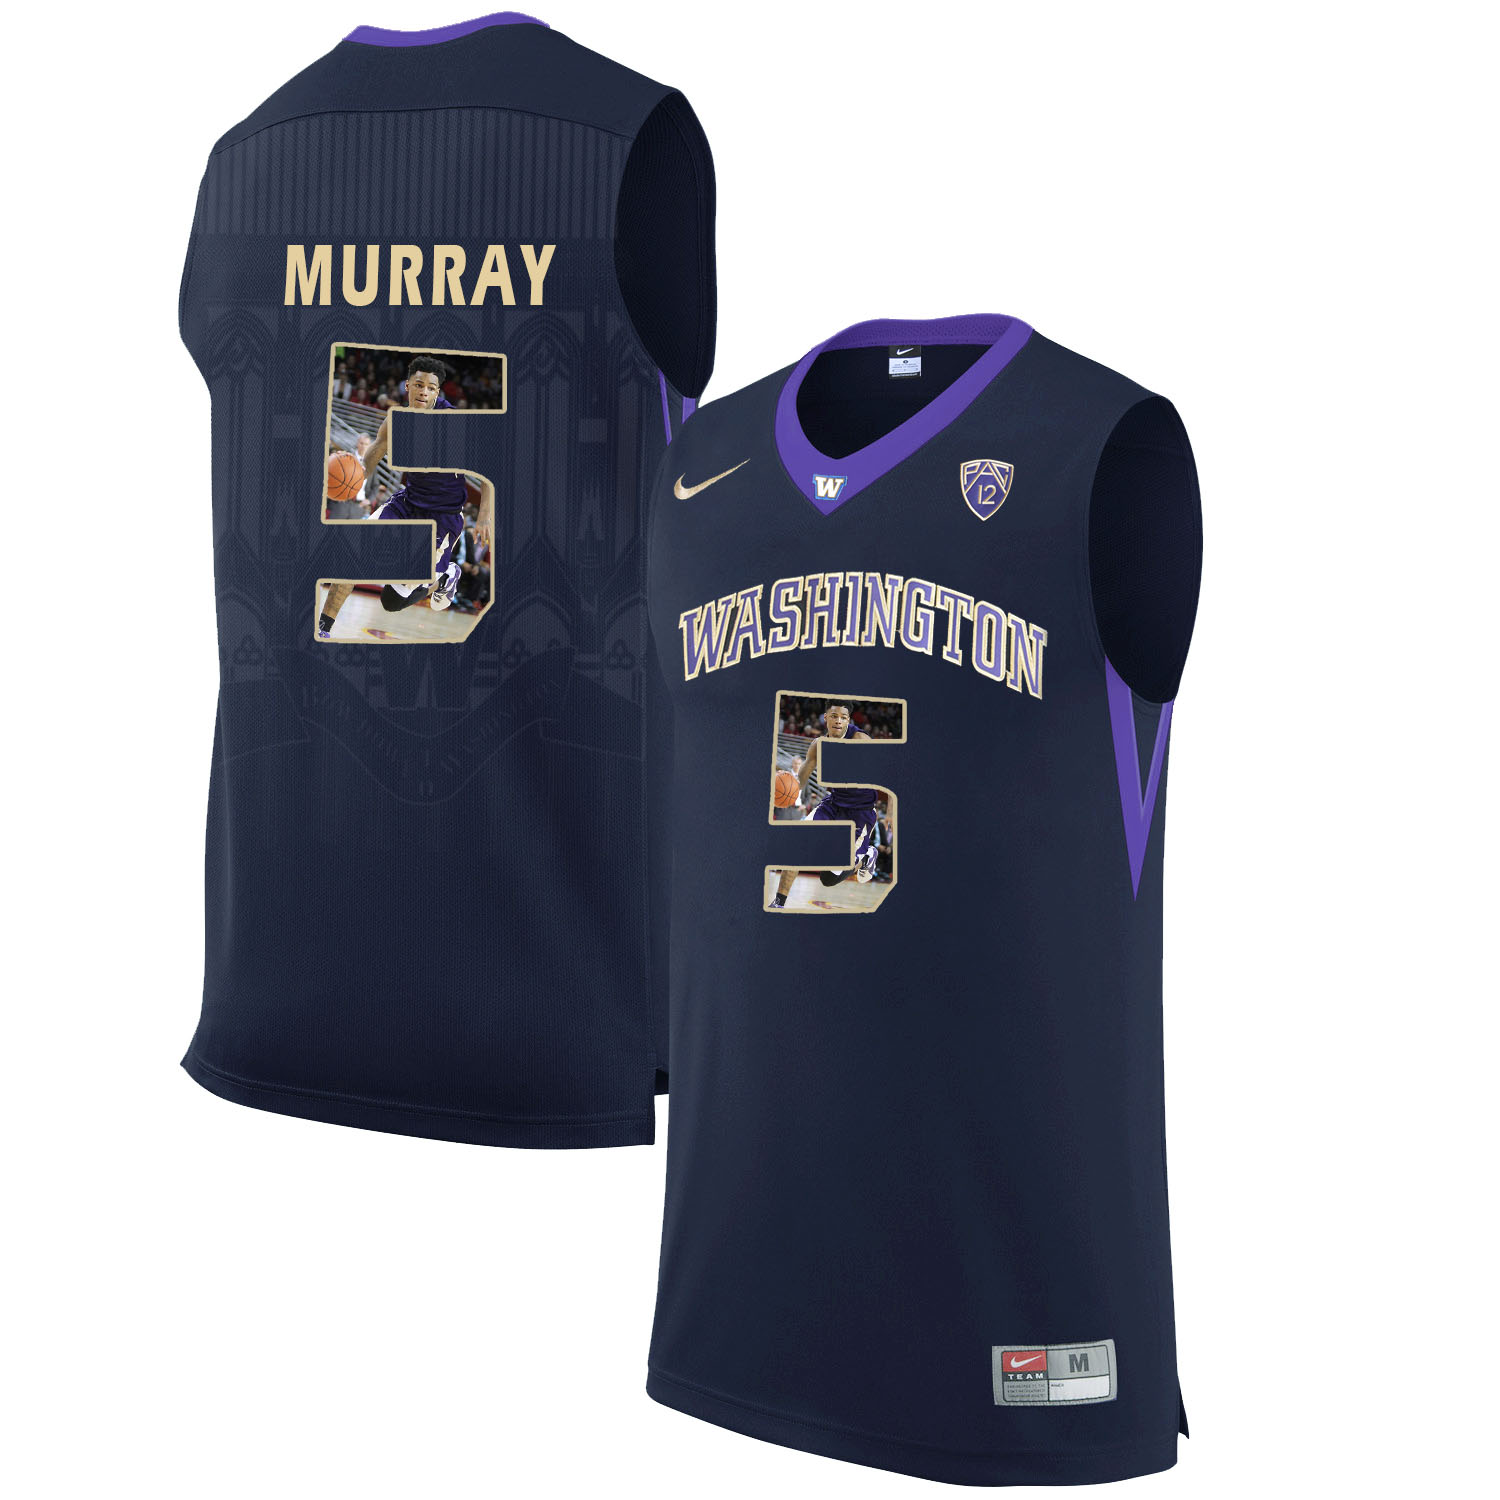 Washington Huskies 5 Dejounte Murray Black With Portait College Basketball Jersey